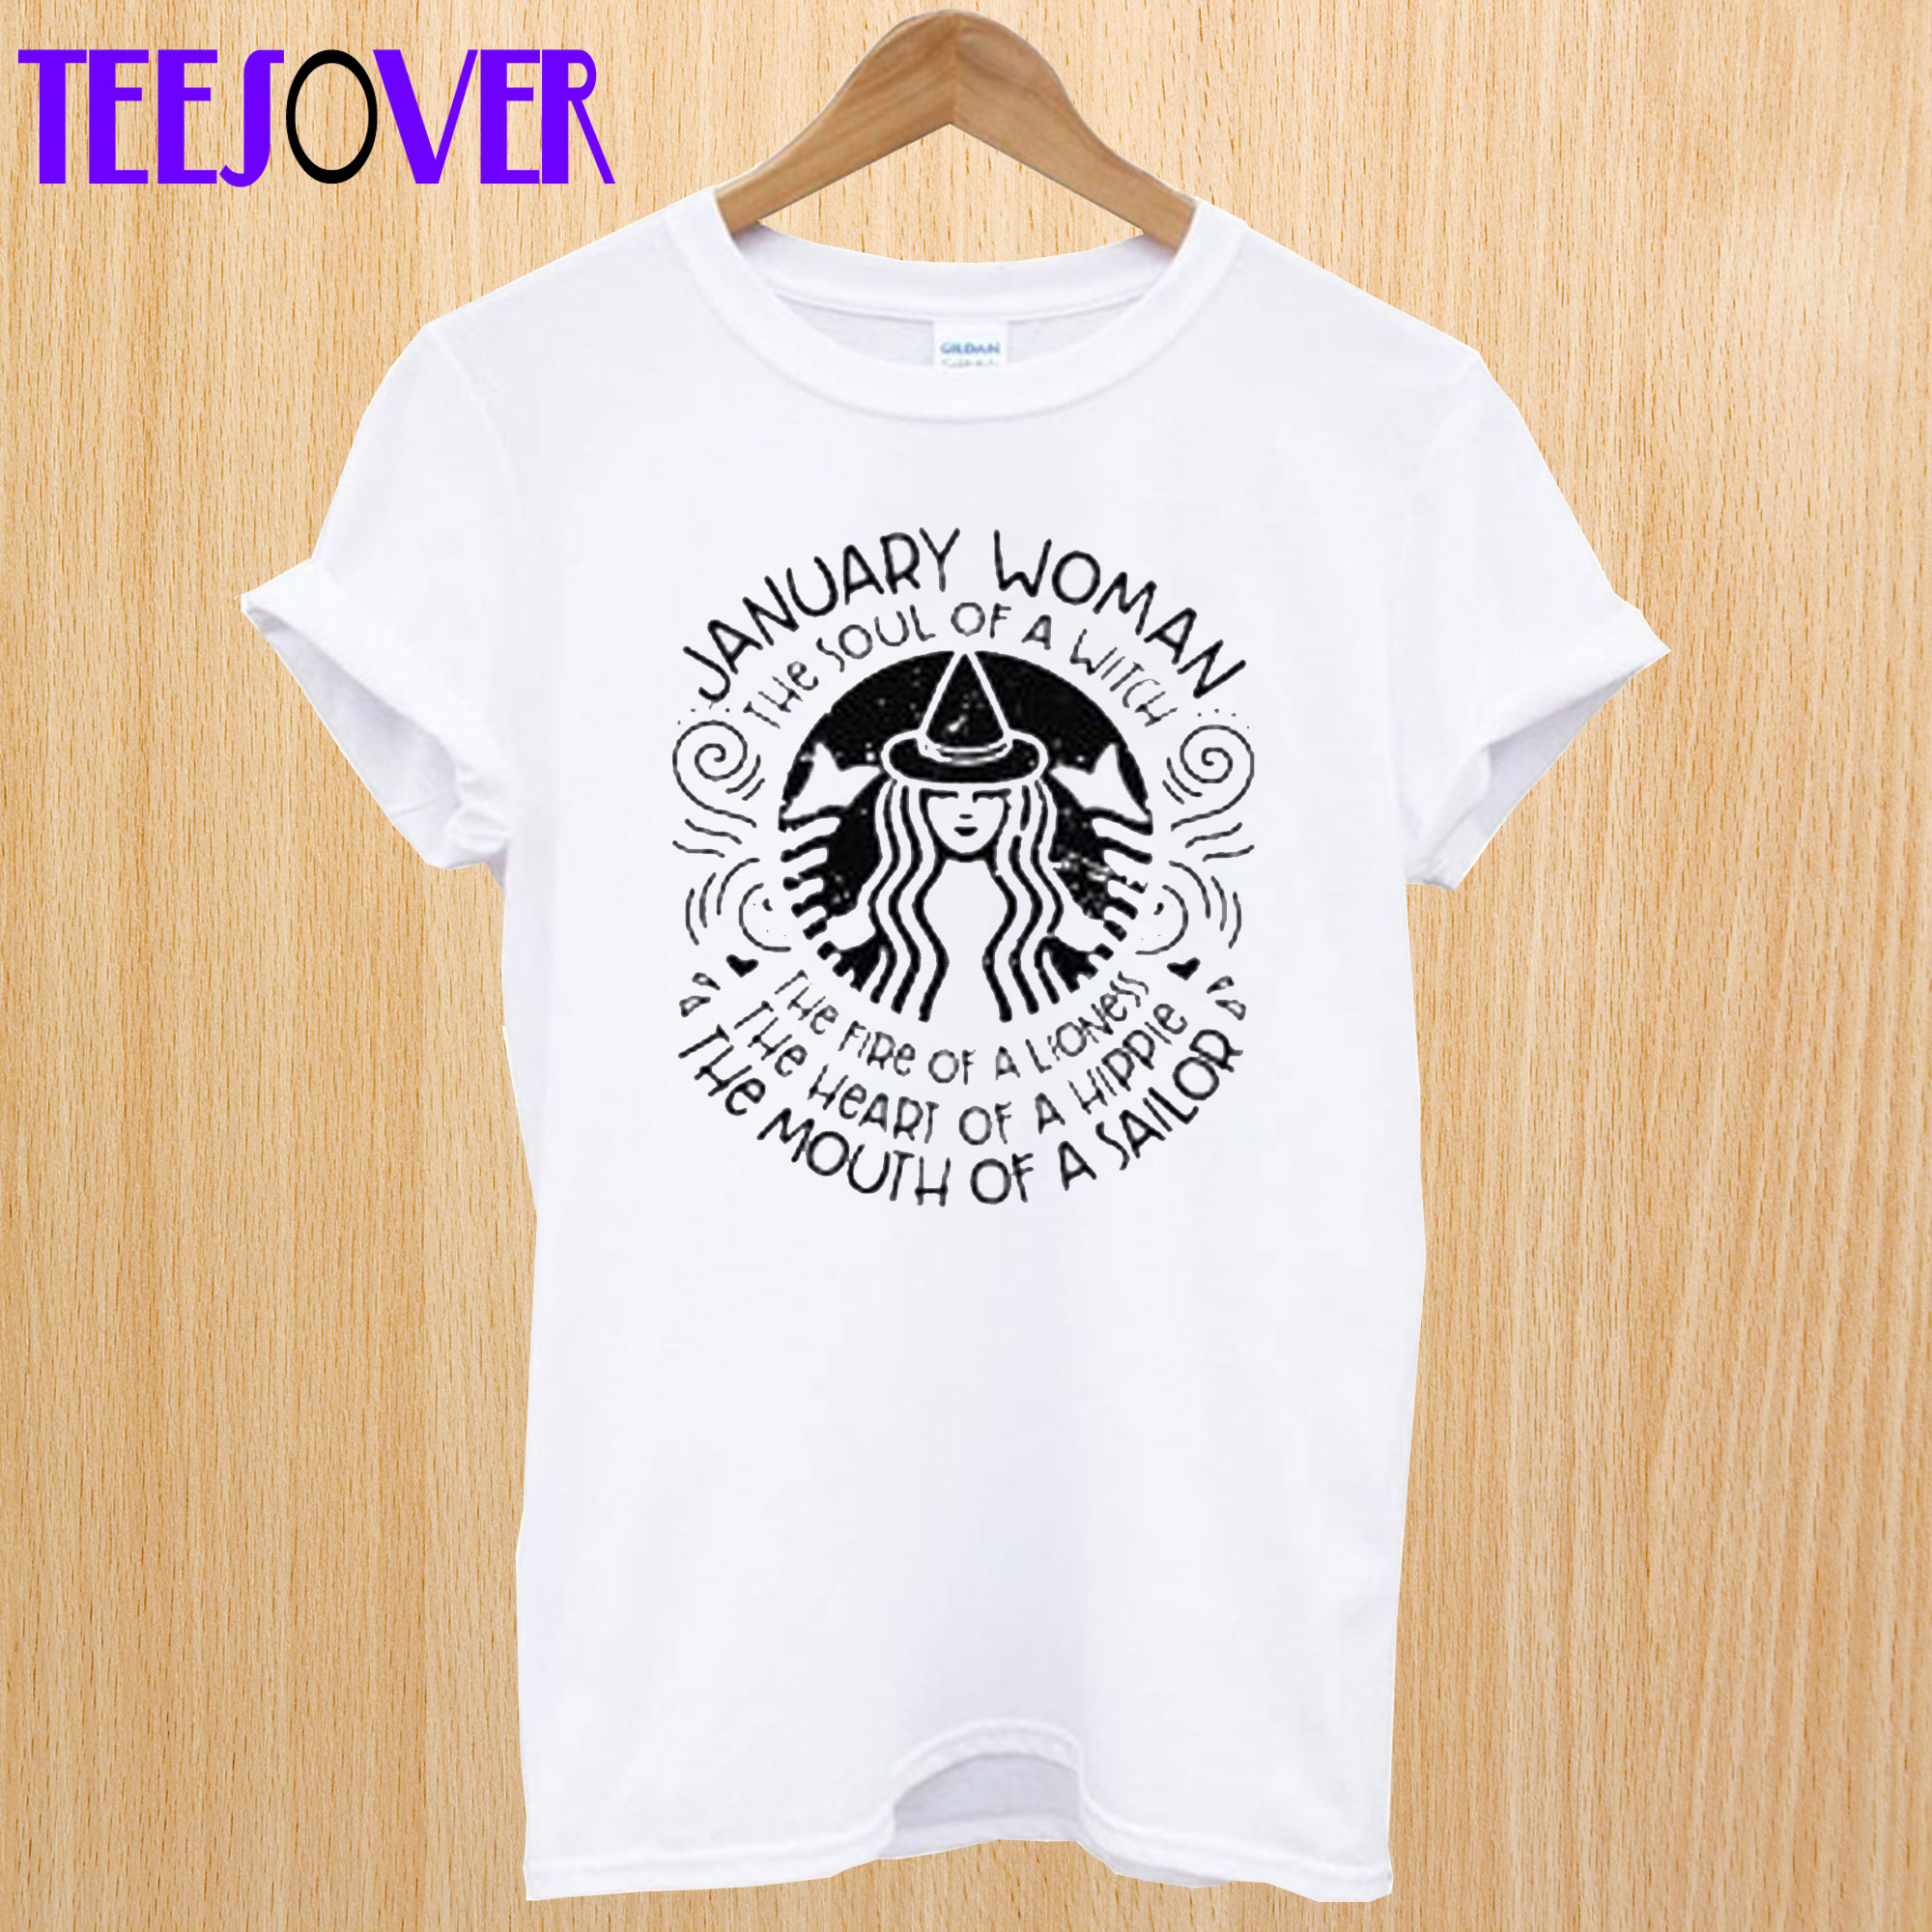 January woman the Starbucks T-shirt